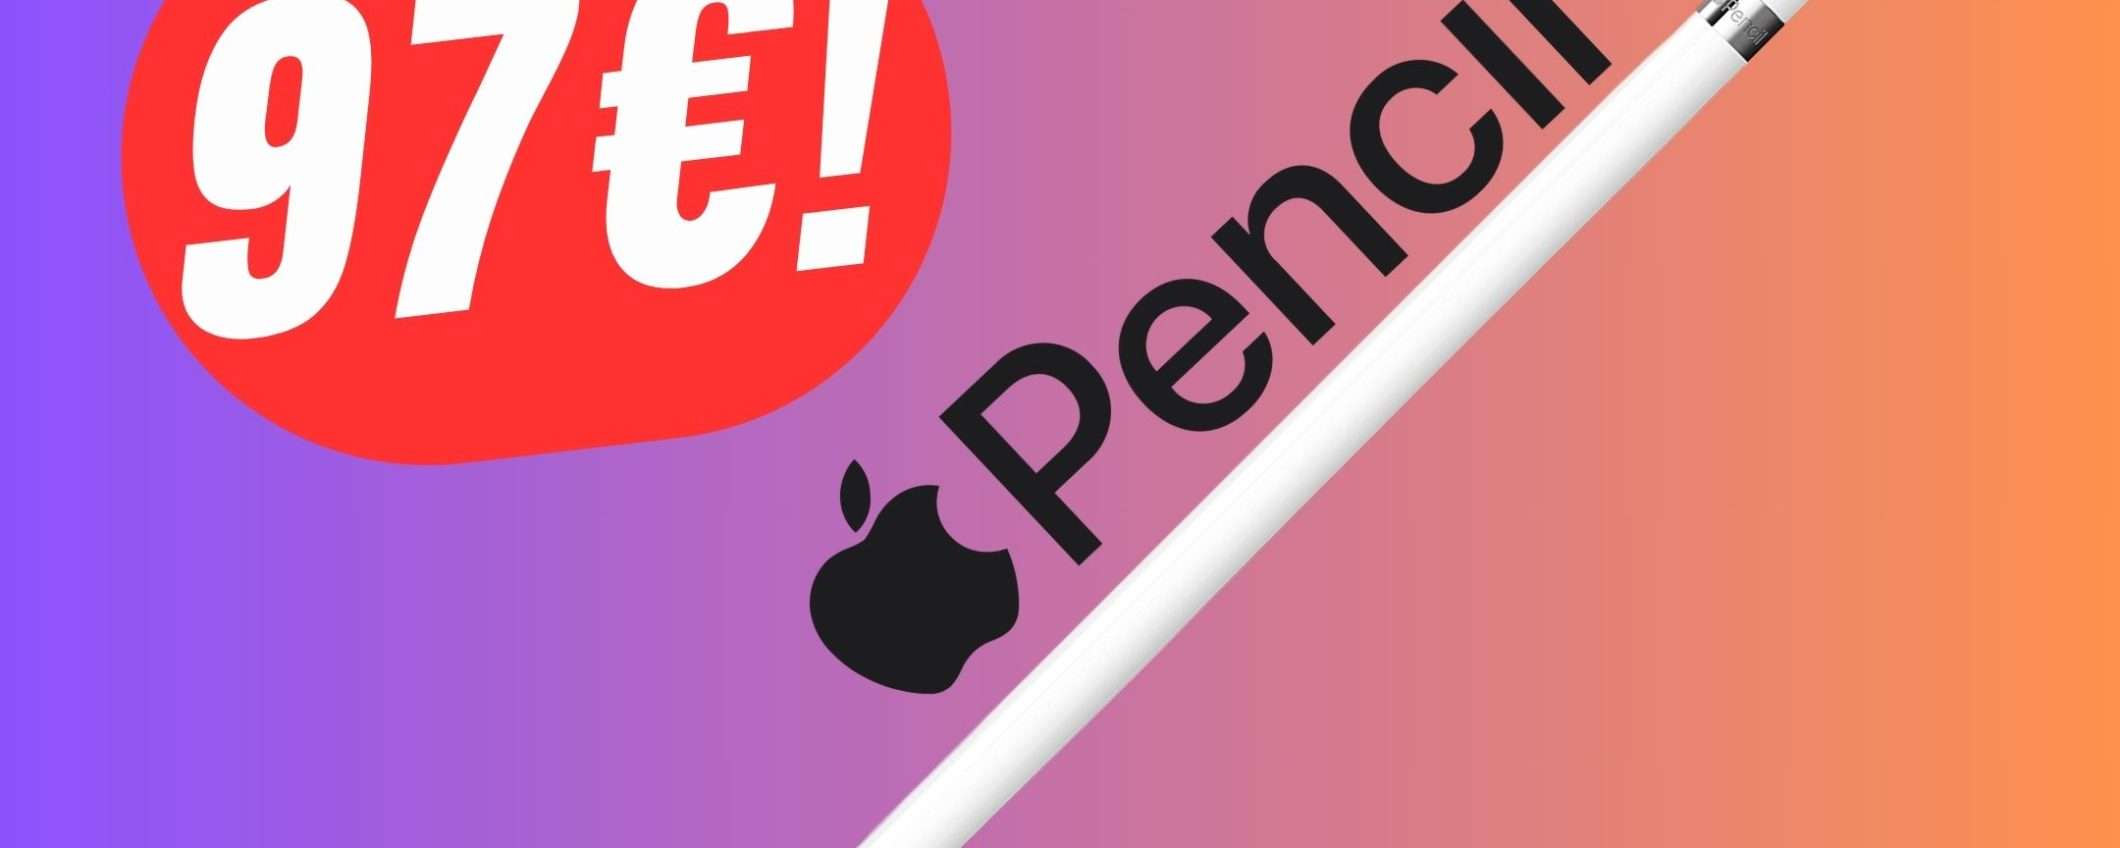 L'originale Apple Pencil è in OFFERTA a MENO DI 100€